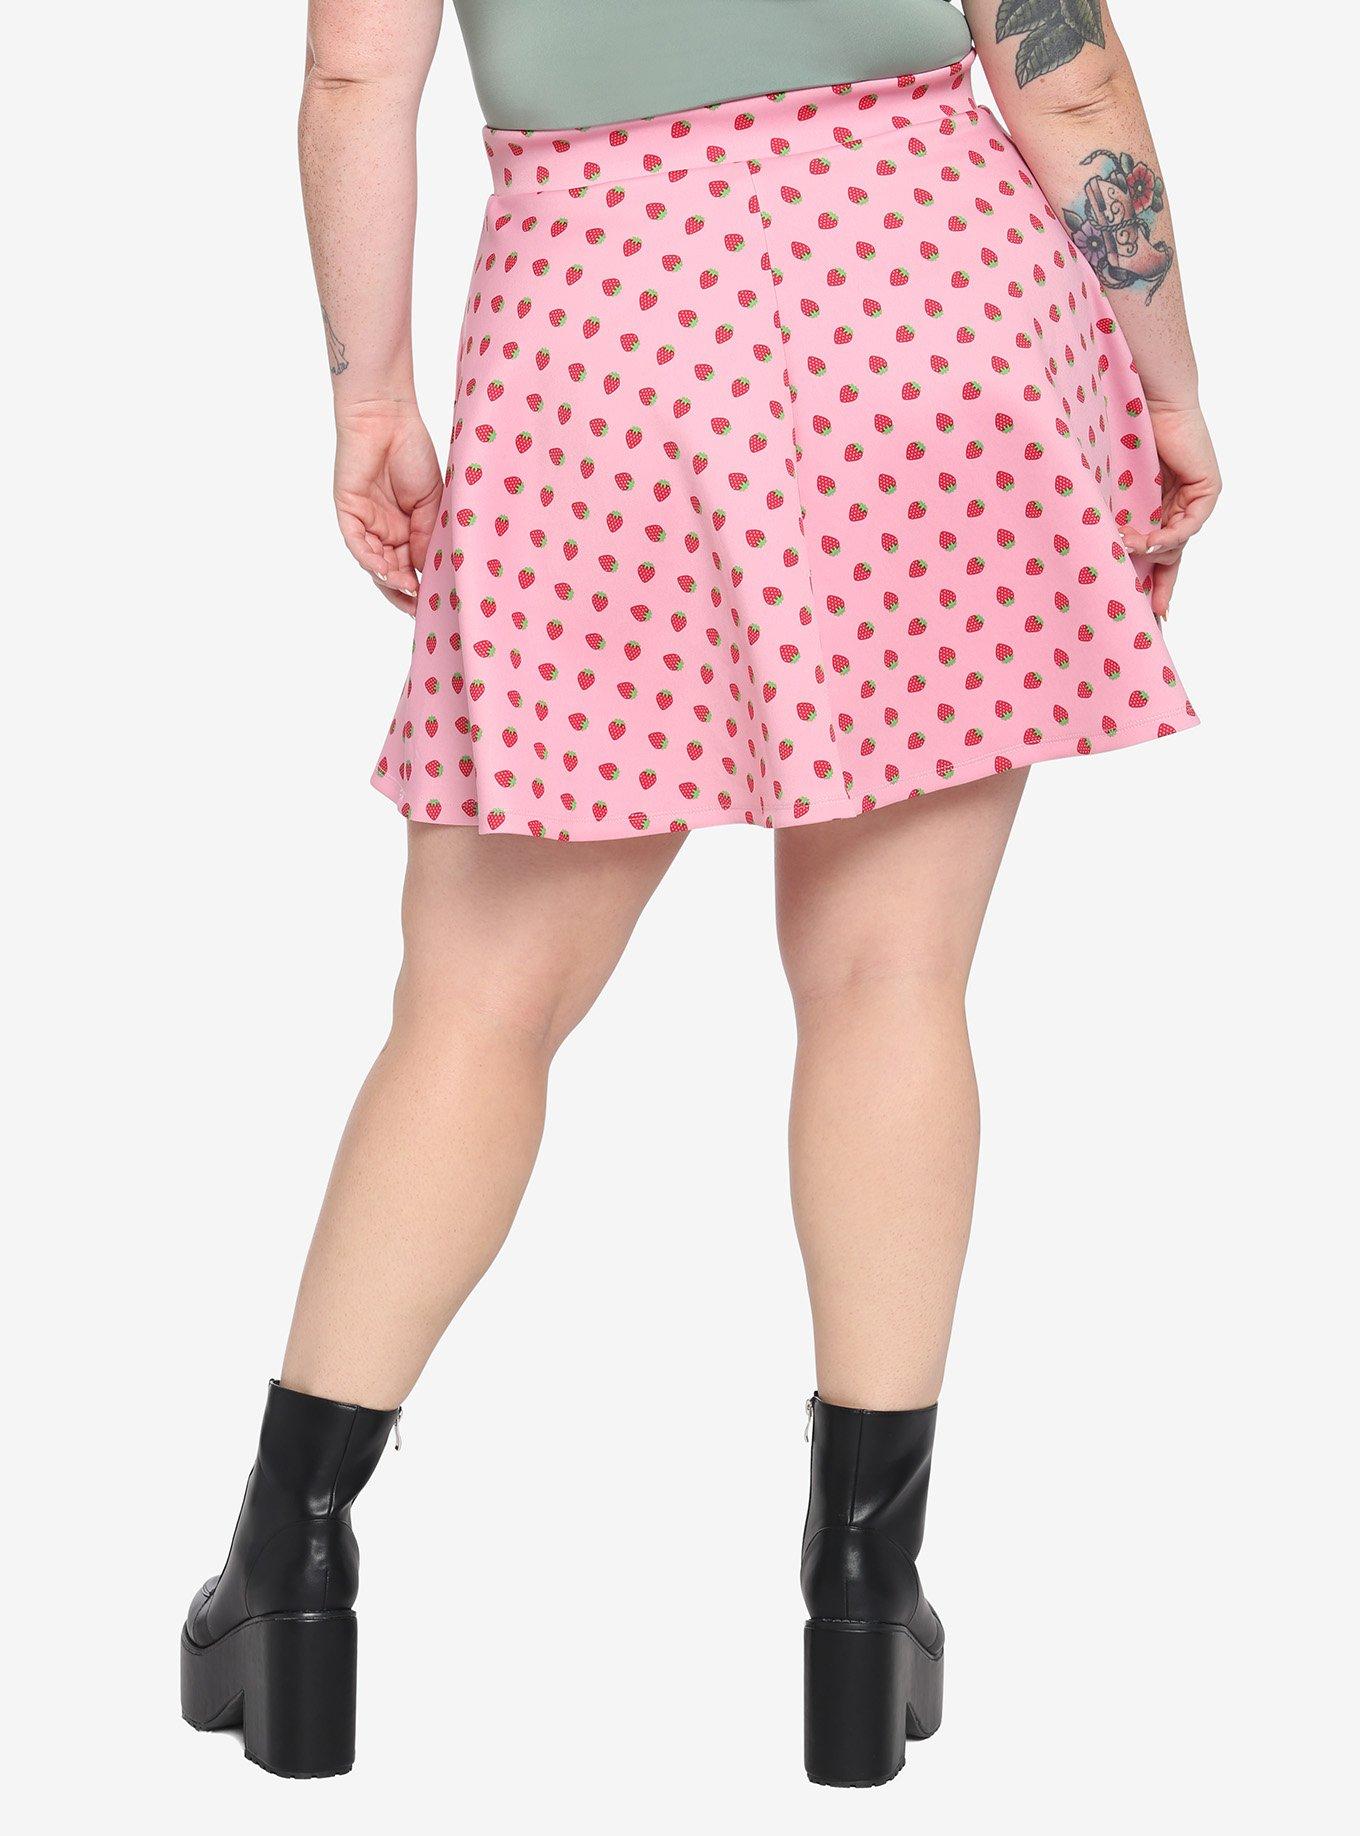 Strawberry Lace-Up Skirt Plus Size, PINK, alternate